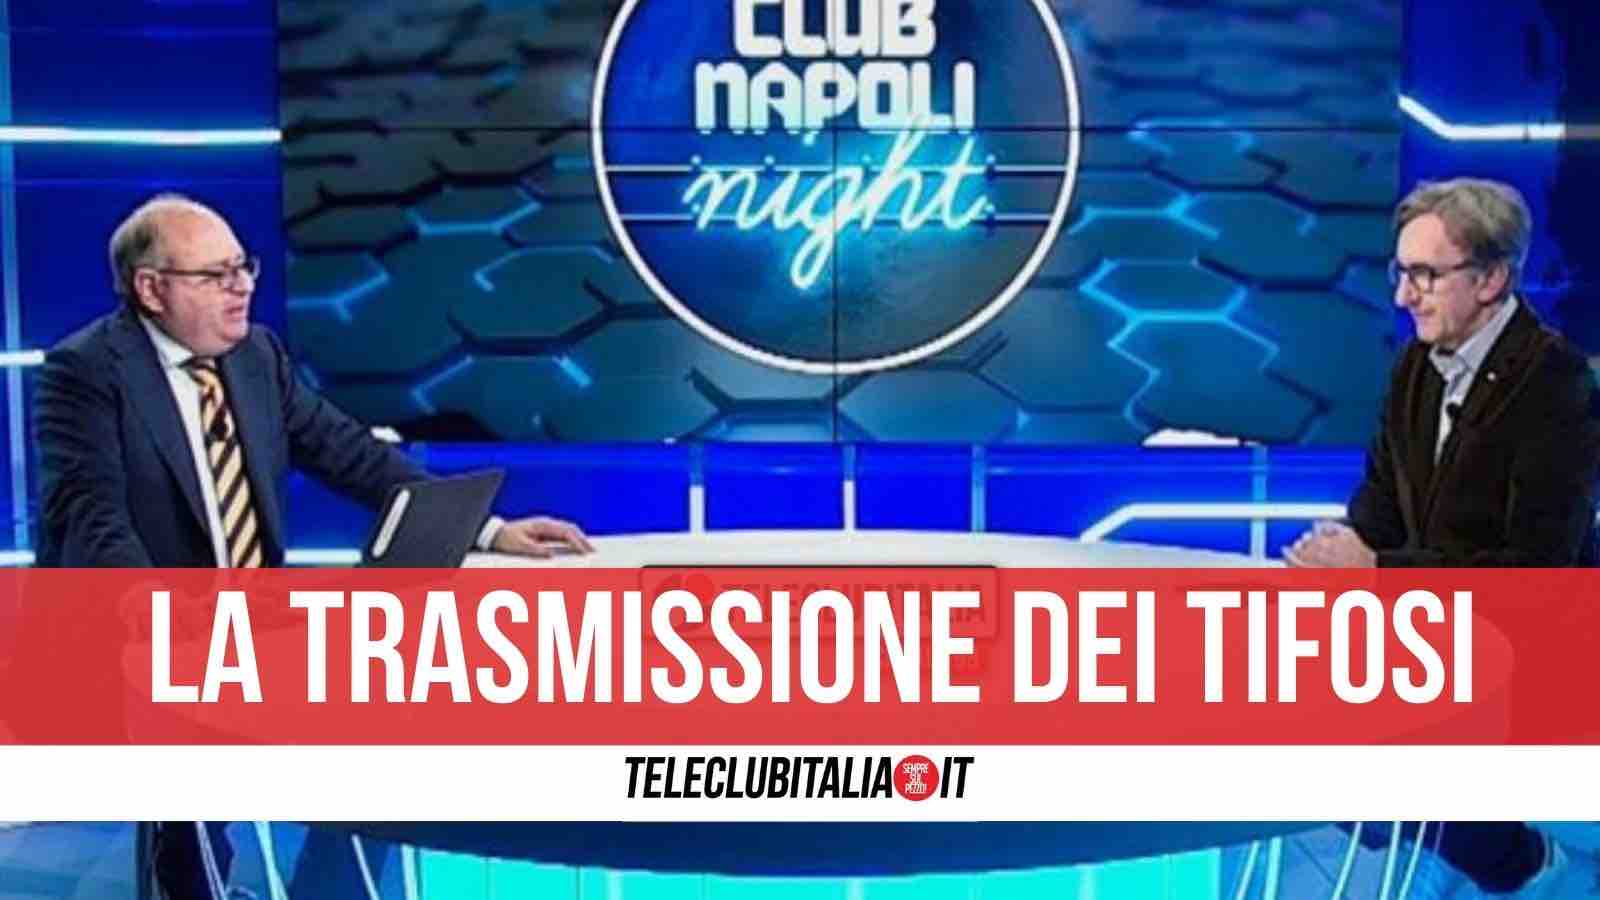 club napoli night teleclubitalia